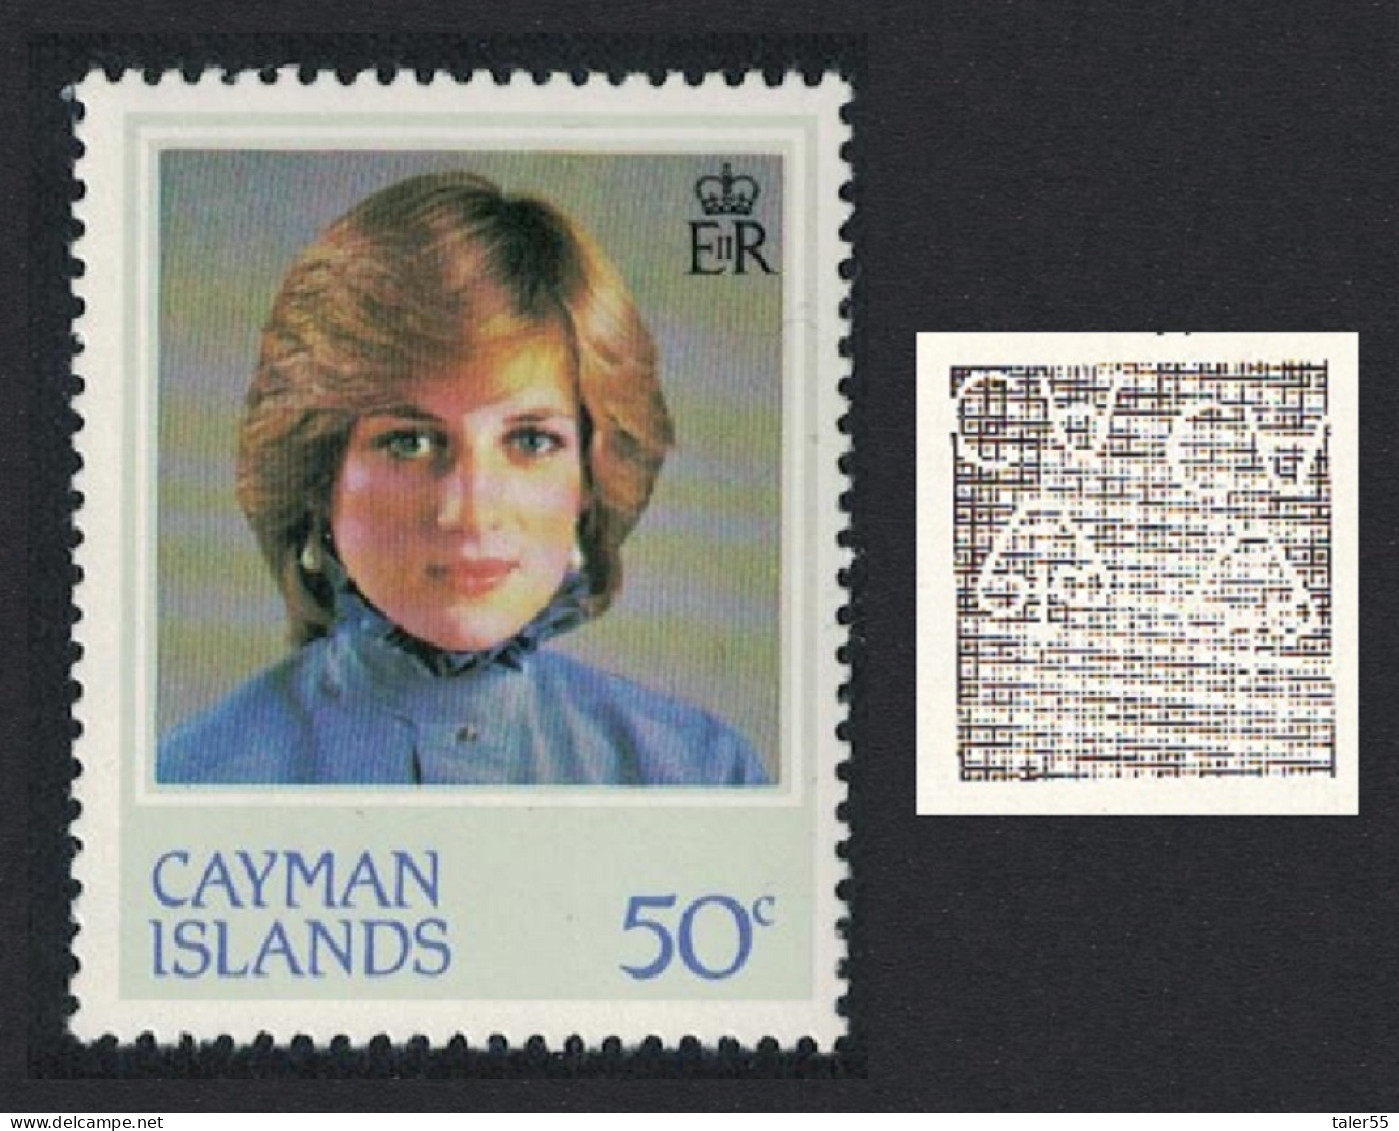 Cayman Is. 21st Birthday Of Princess Of Wales 50c Watermark Variety 1982 MNH SG#552w - Caimán (Islas)